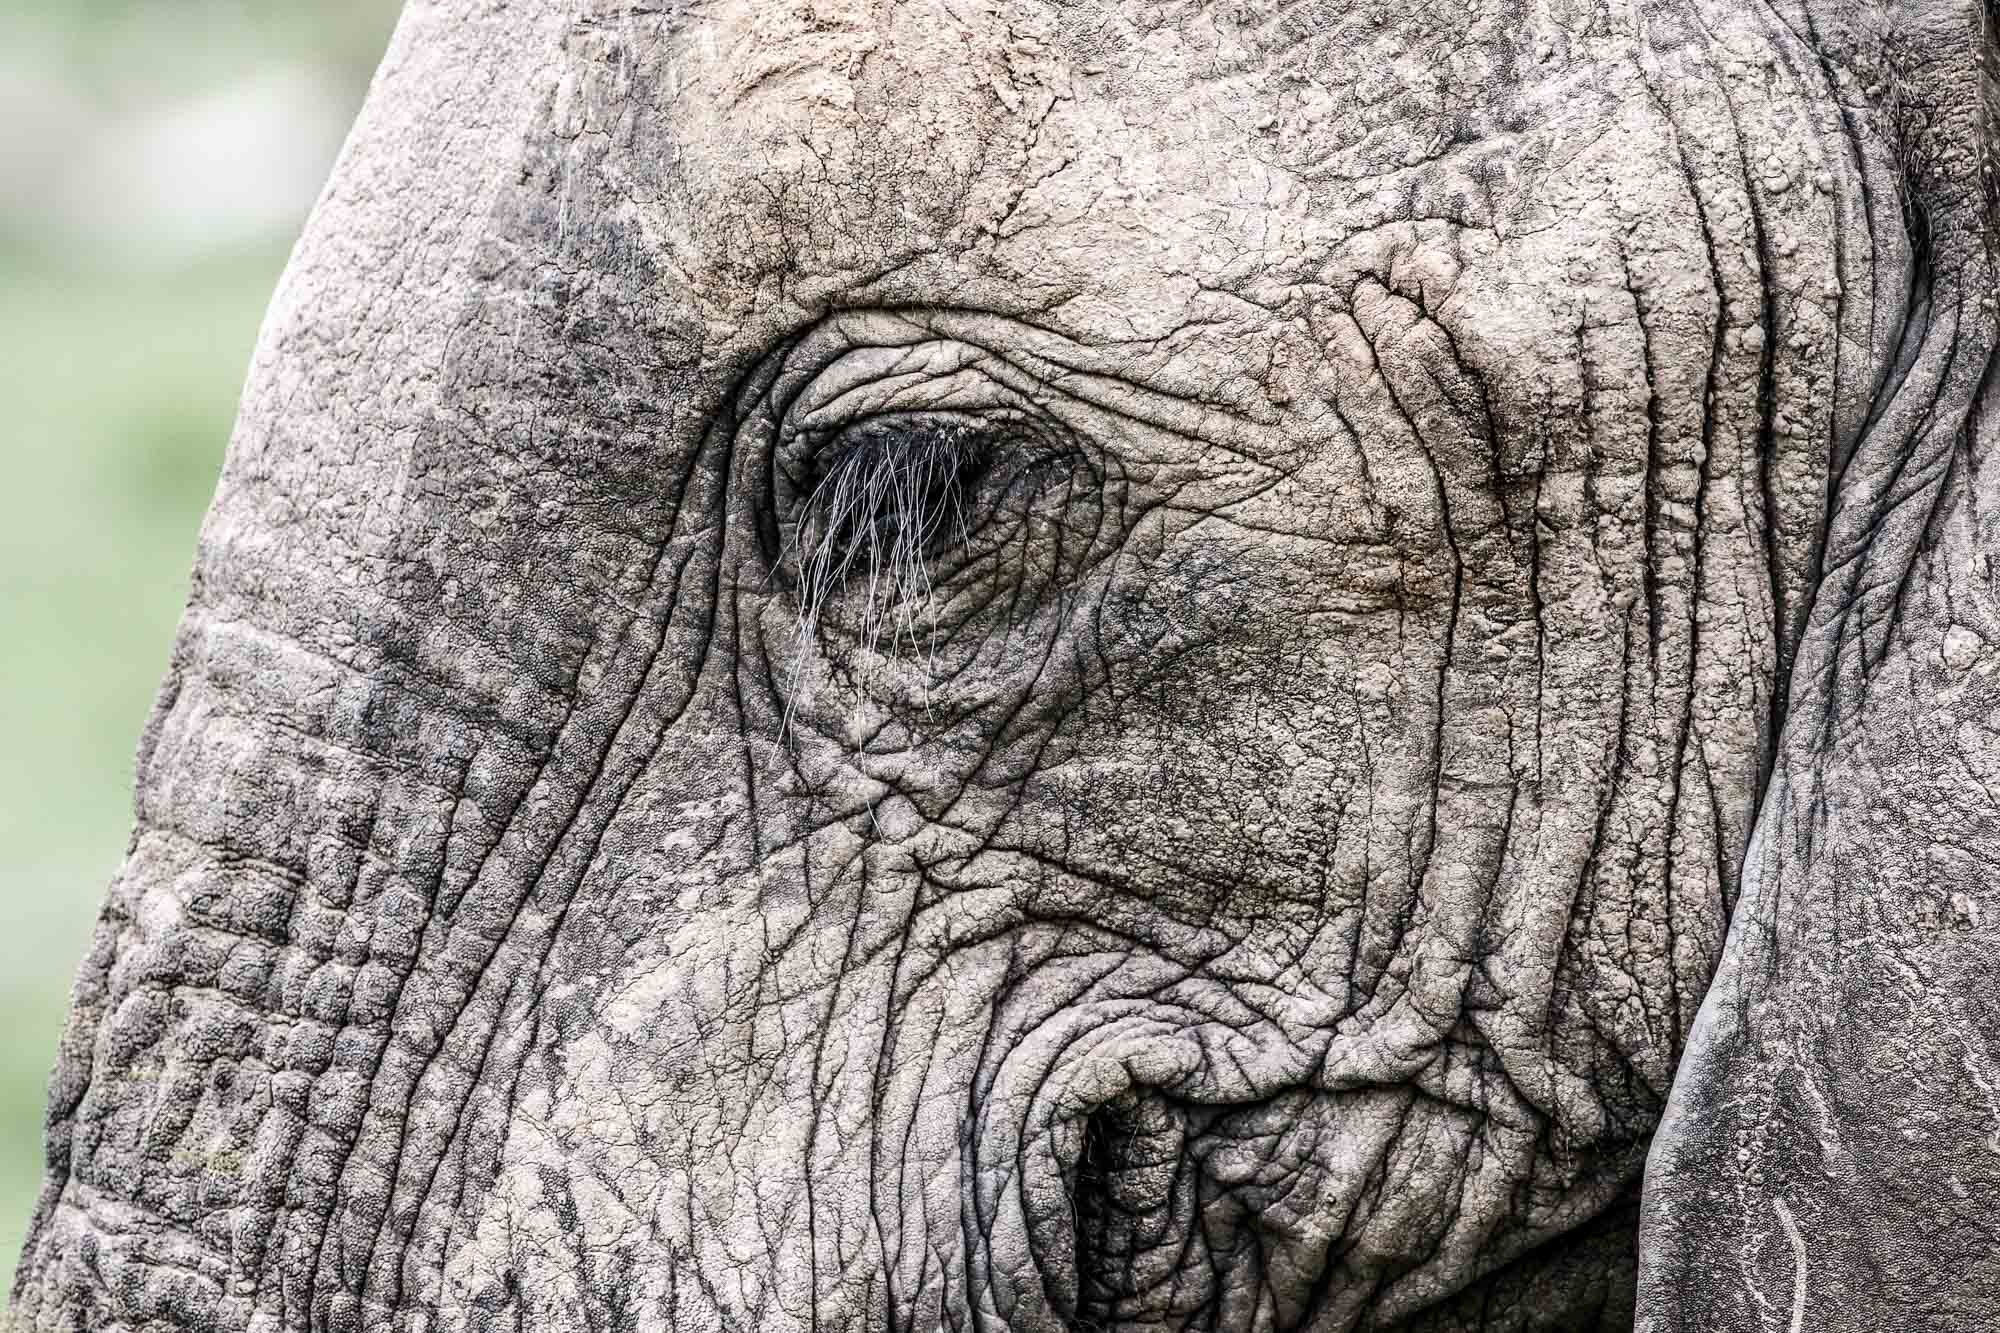 Grey_elephant_close-up_South_Africa_Safari_2016_©_Howard_Wolff-17.jpg